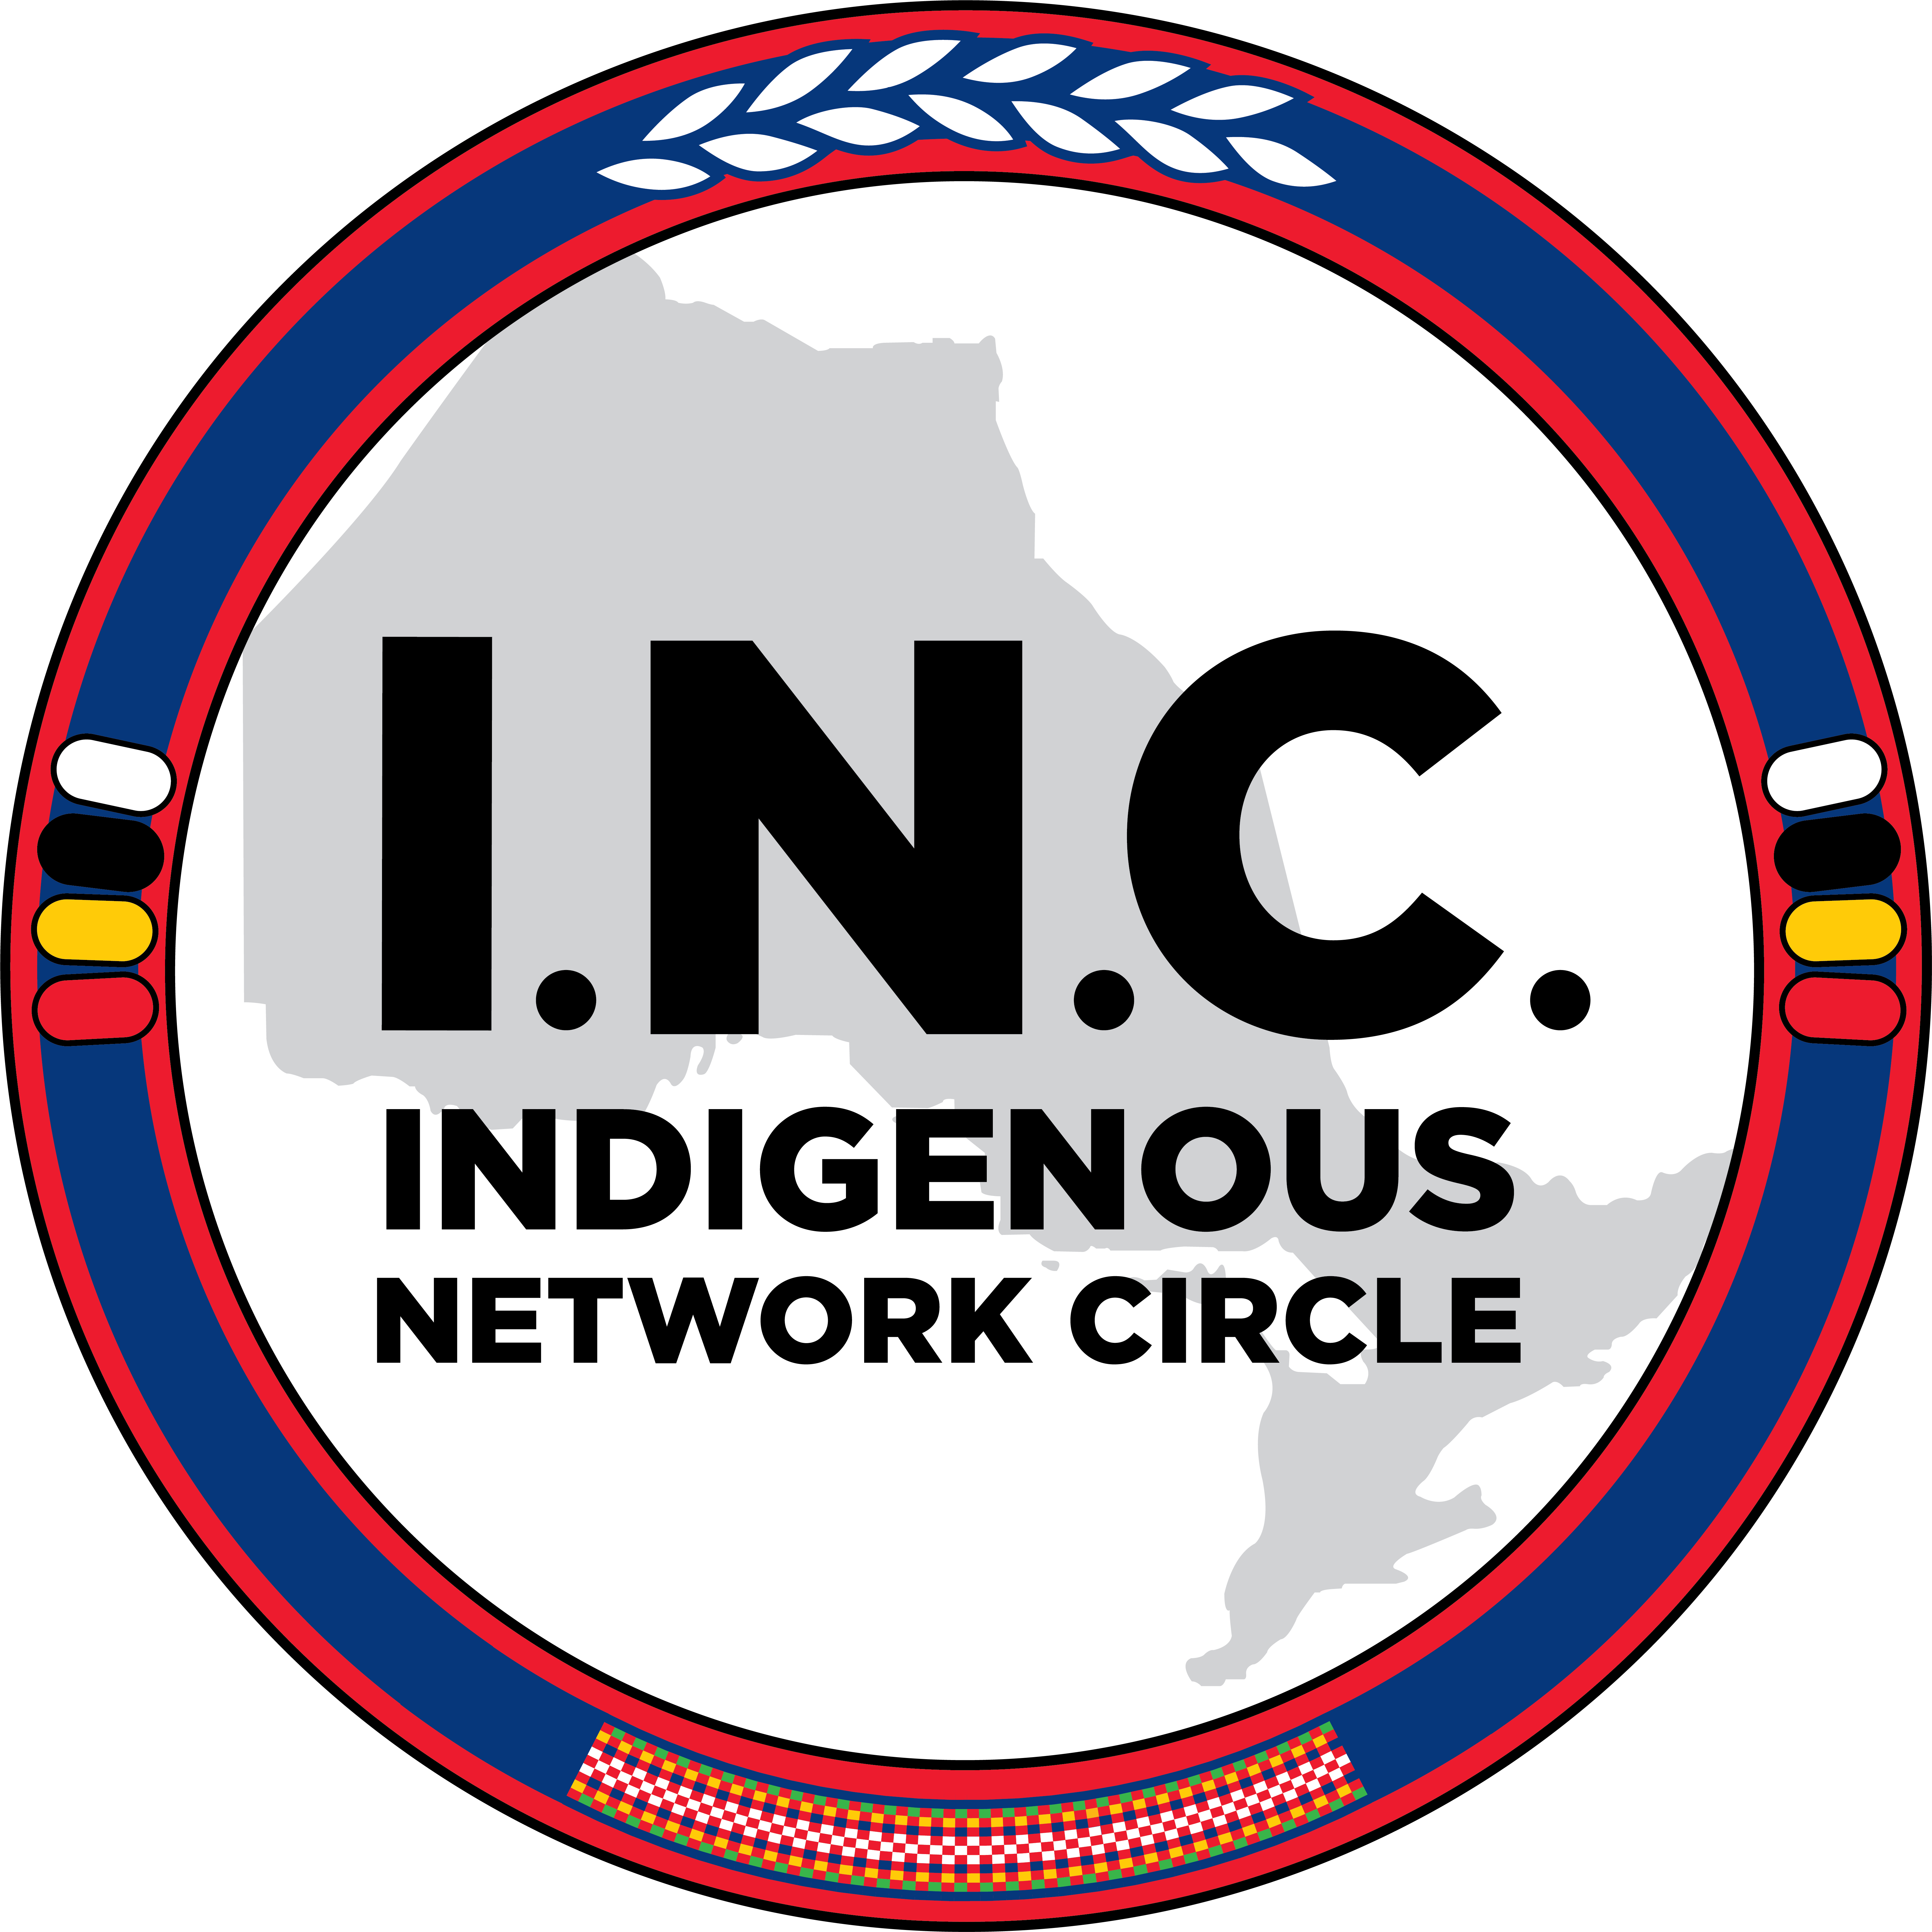 image of the Indigenous Network Circle logo